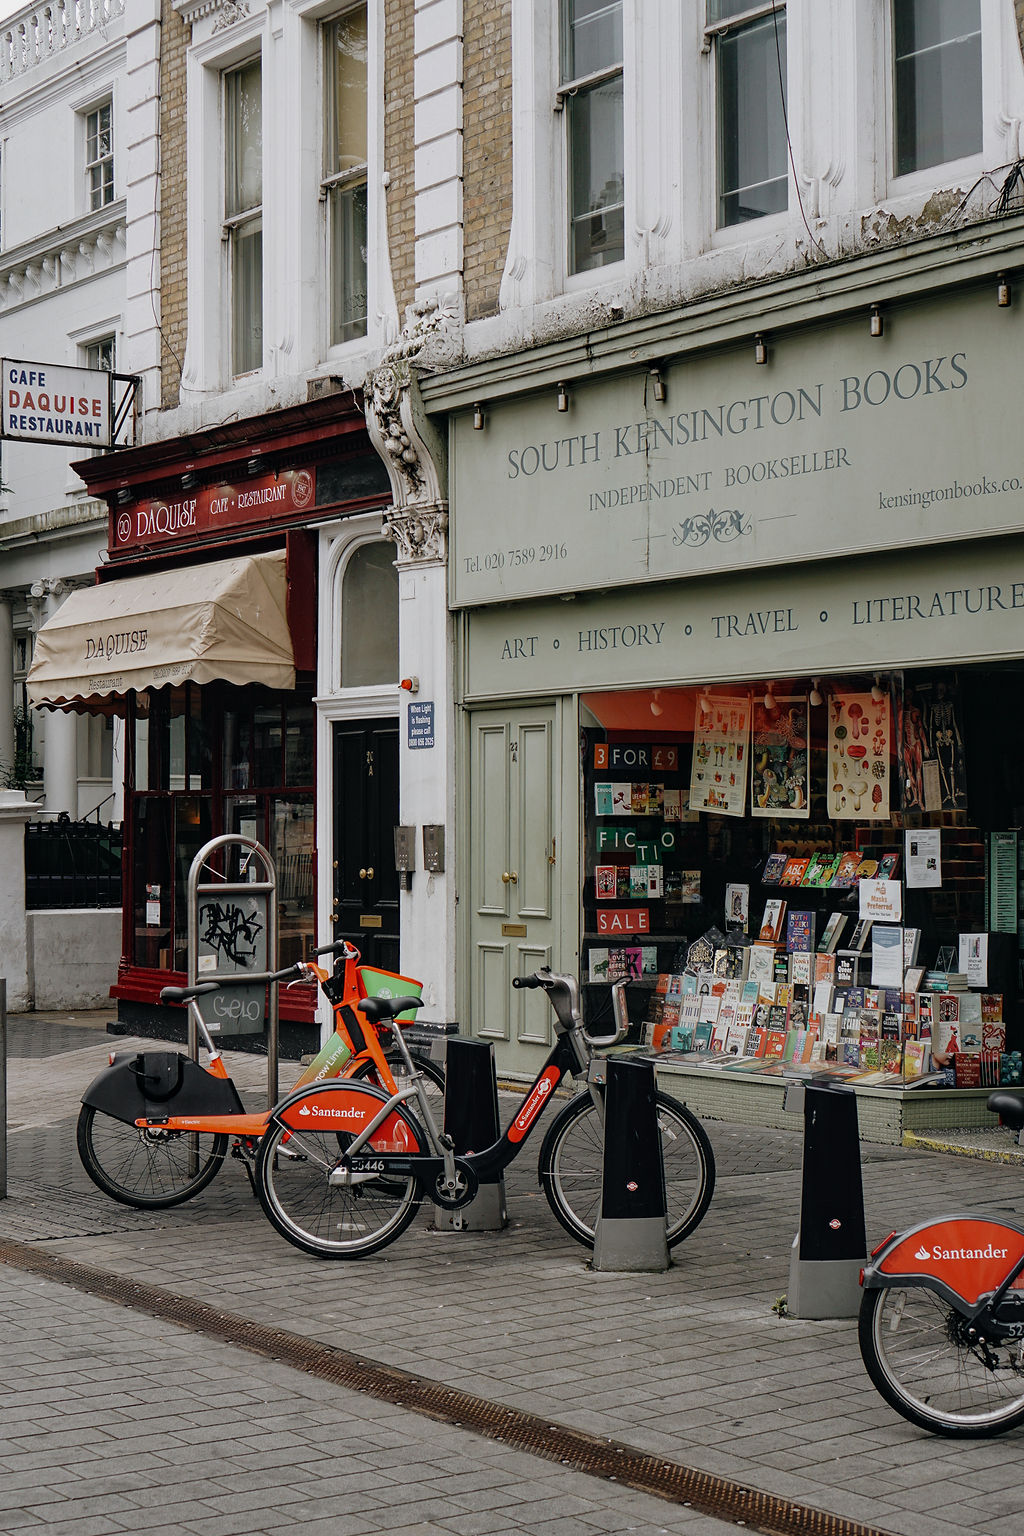 South Kensington Books